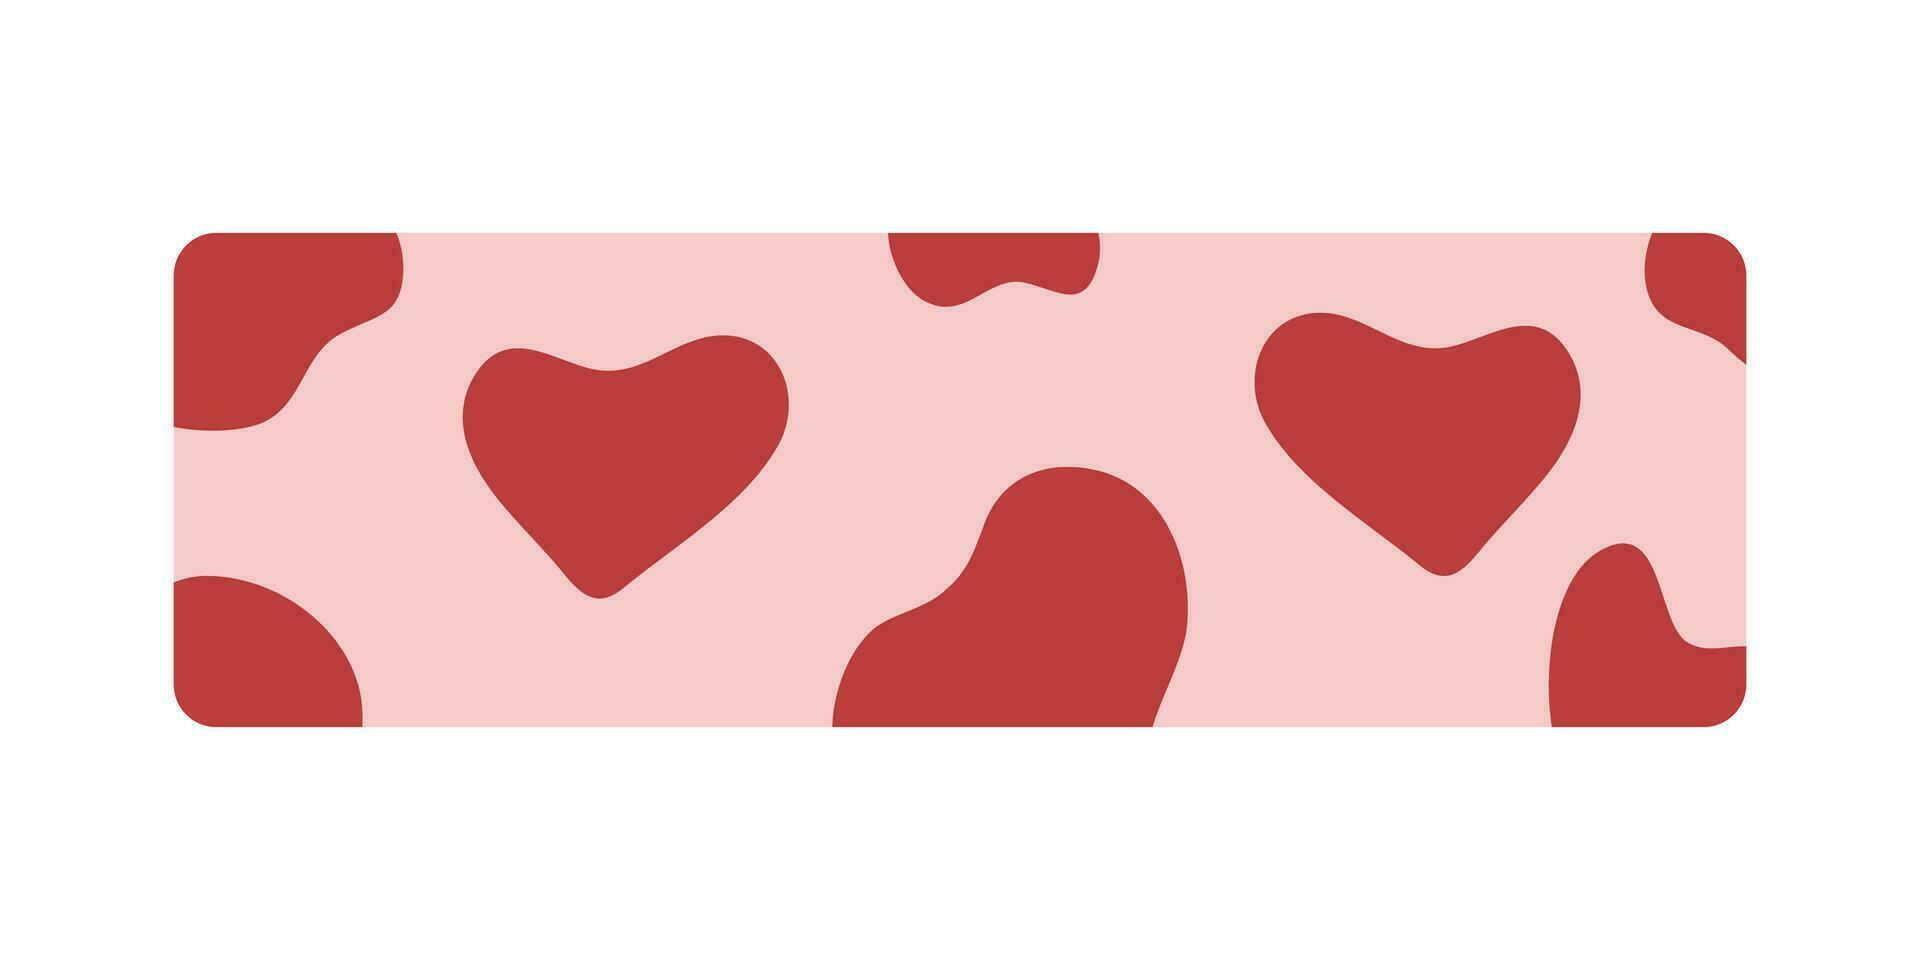 Pastel Lace Washi Tape Love Heart Valentine Pattern Scrapbook Journal  Stationery Sticker Planner let's Washi Tape 